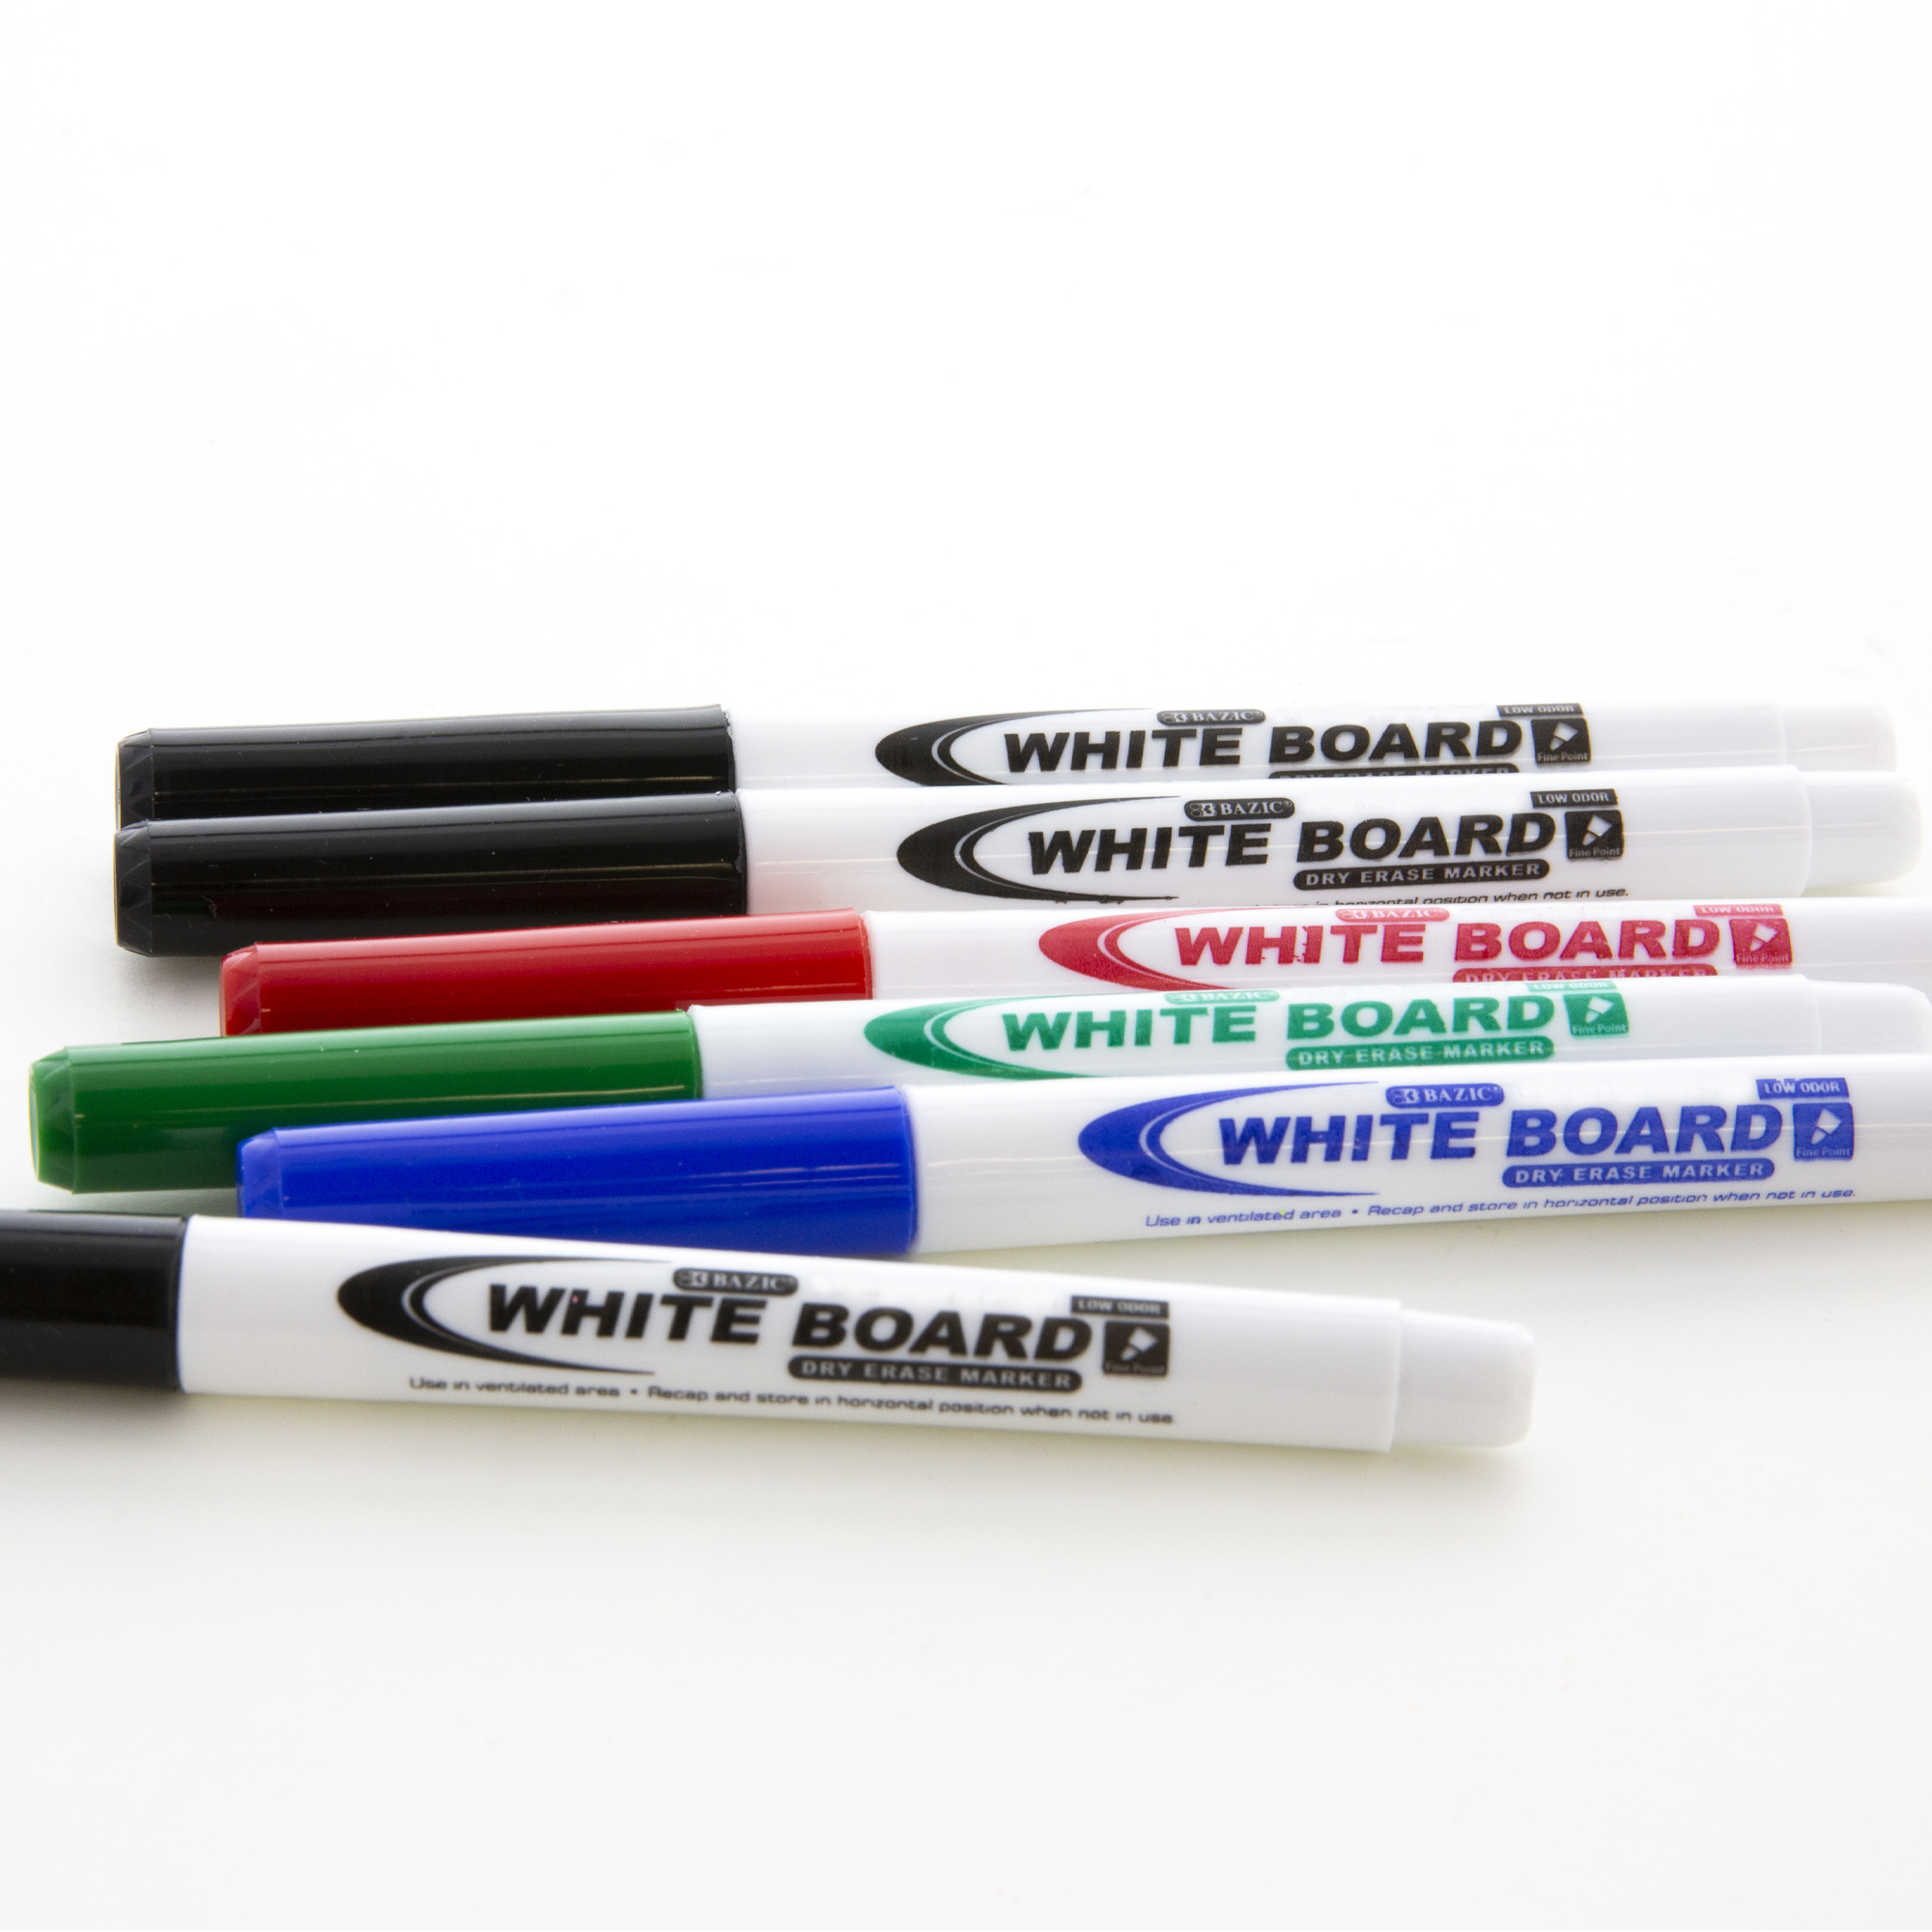 Bazic Chisel Tip Bright Color Dry-Erase Markers (6/pack) Box - 12 Units @ per Unit